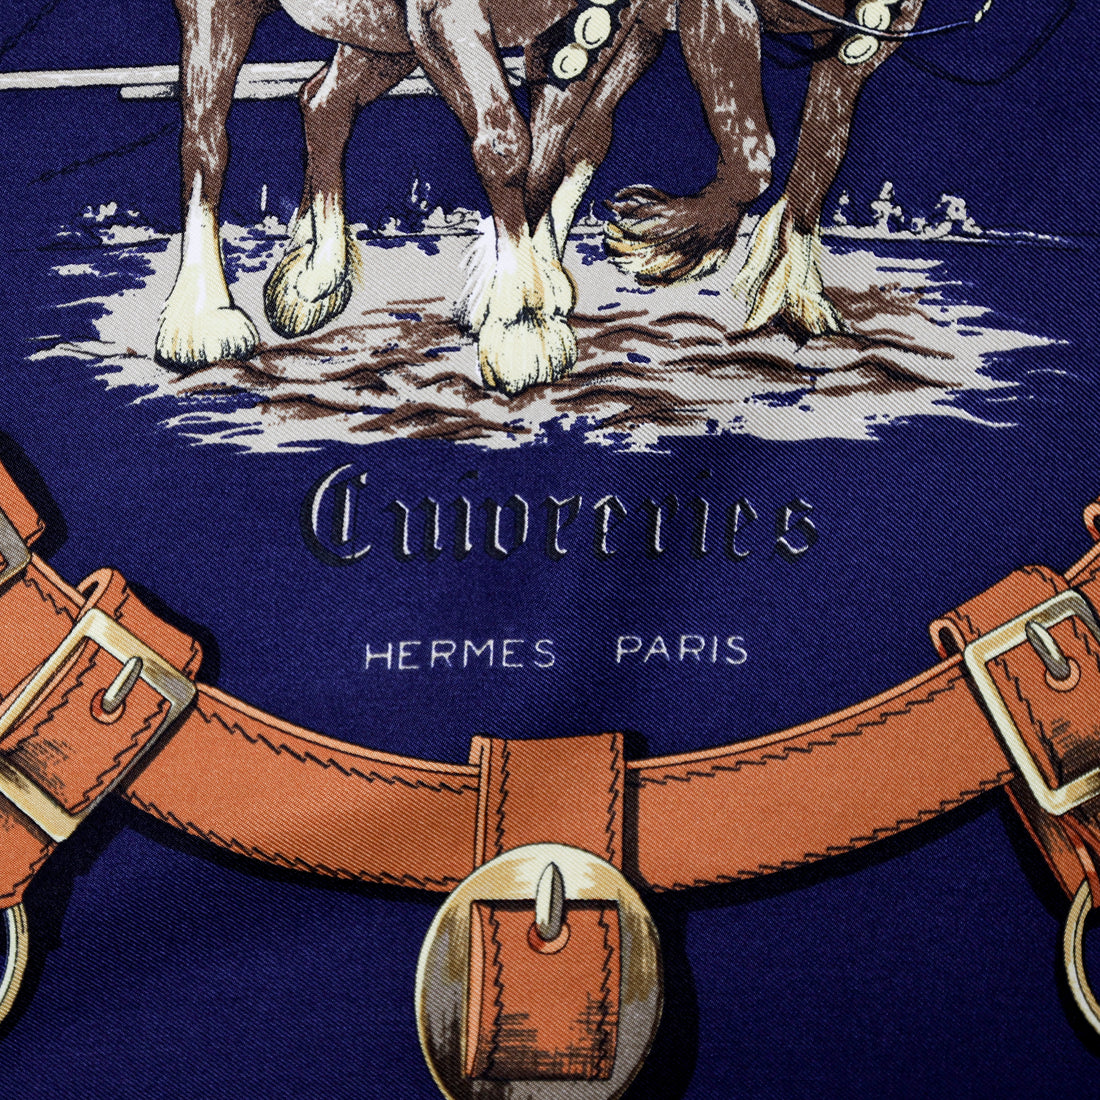 Hermès "Cuivreries" silk scarf in dark blue